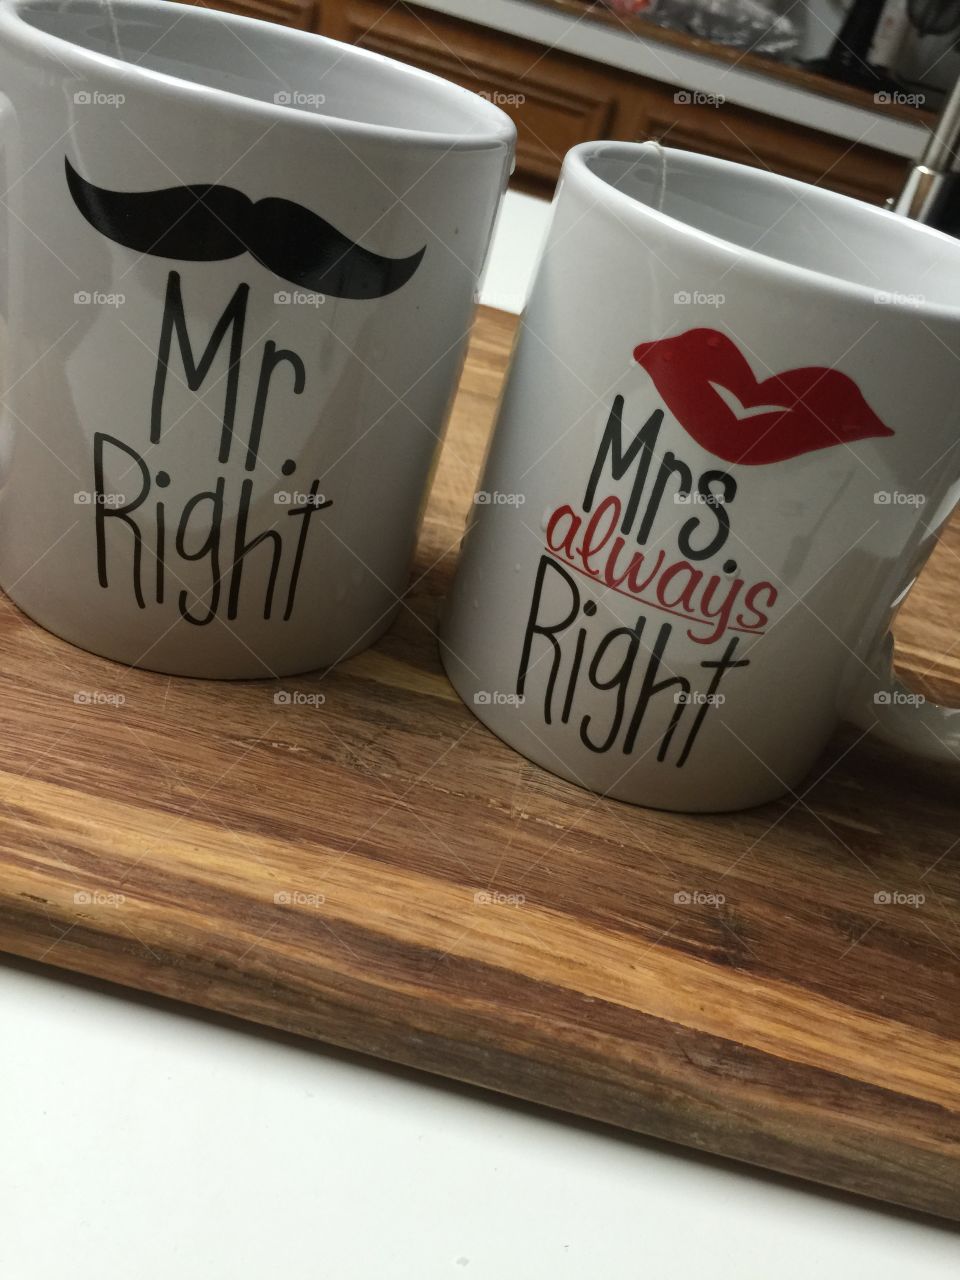 Mugs. Our new coffee mugs 